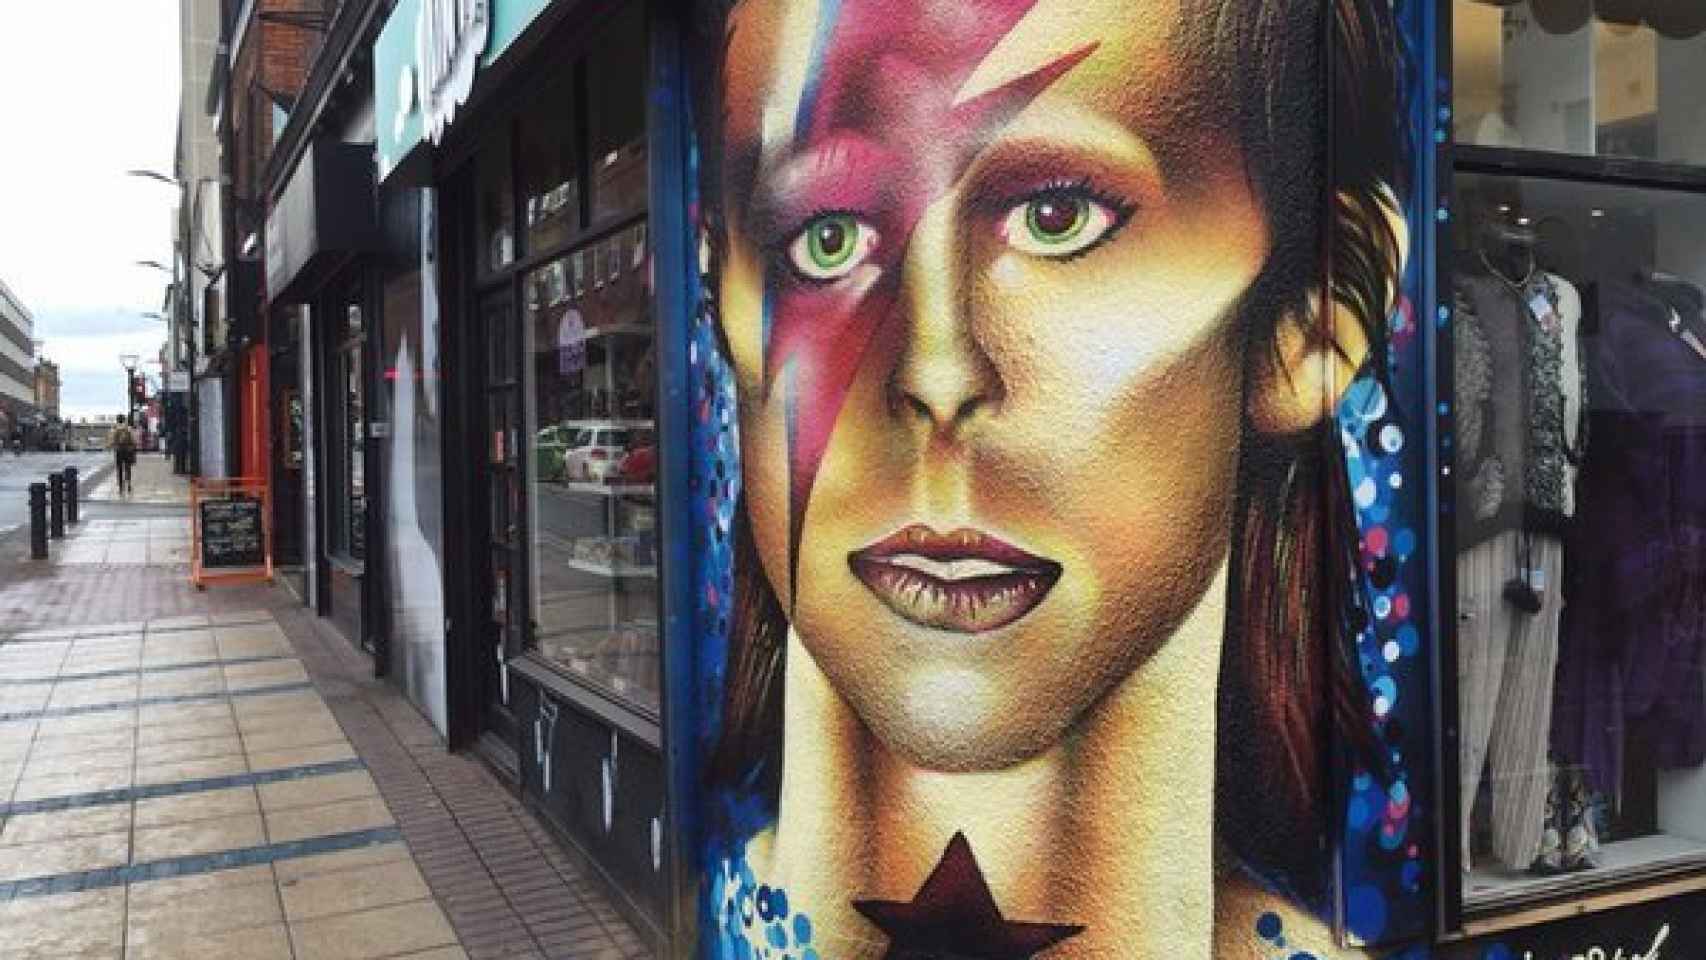 El artista de Sheffield Trik firma este mural